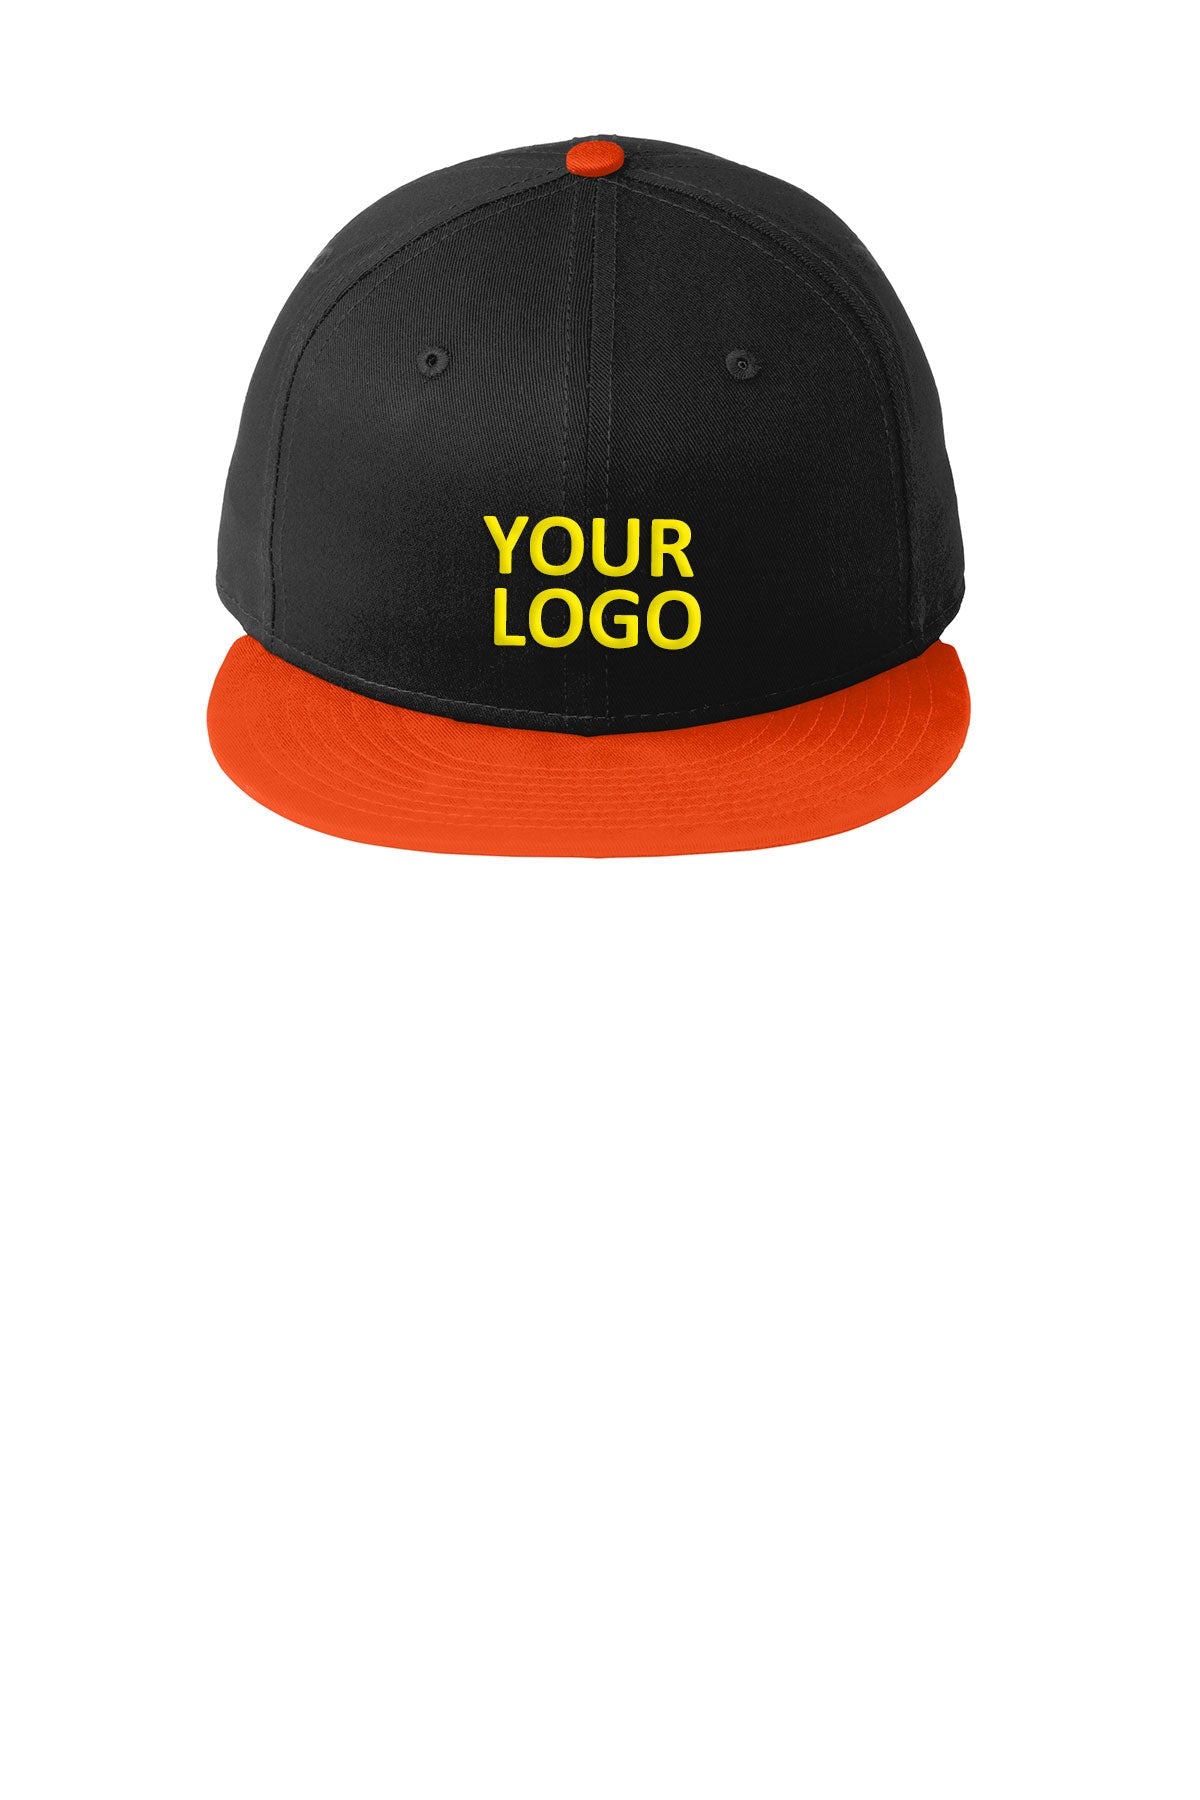 New Era Flat Bill Snapback Customized Caps, Black/ Team Orange